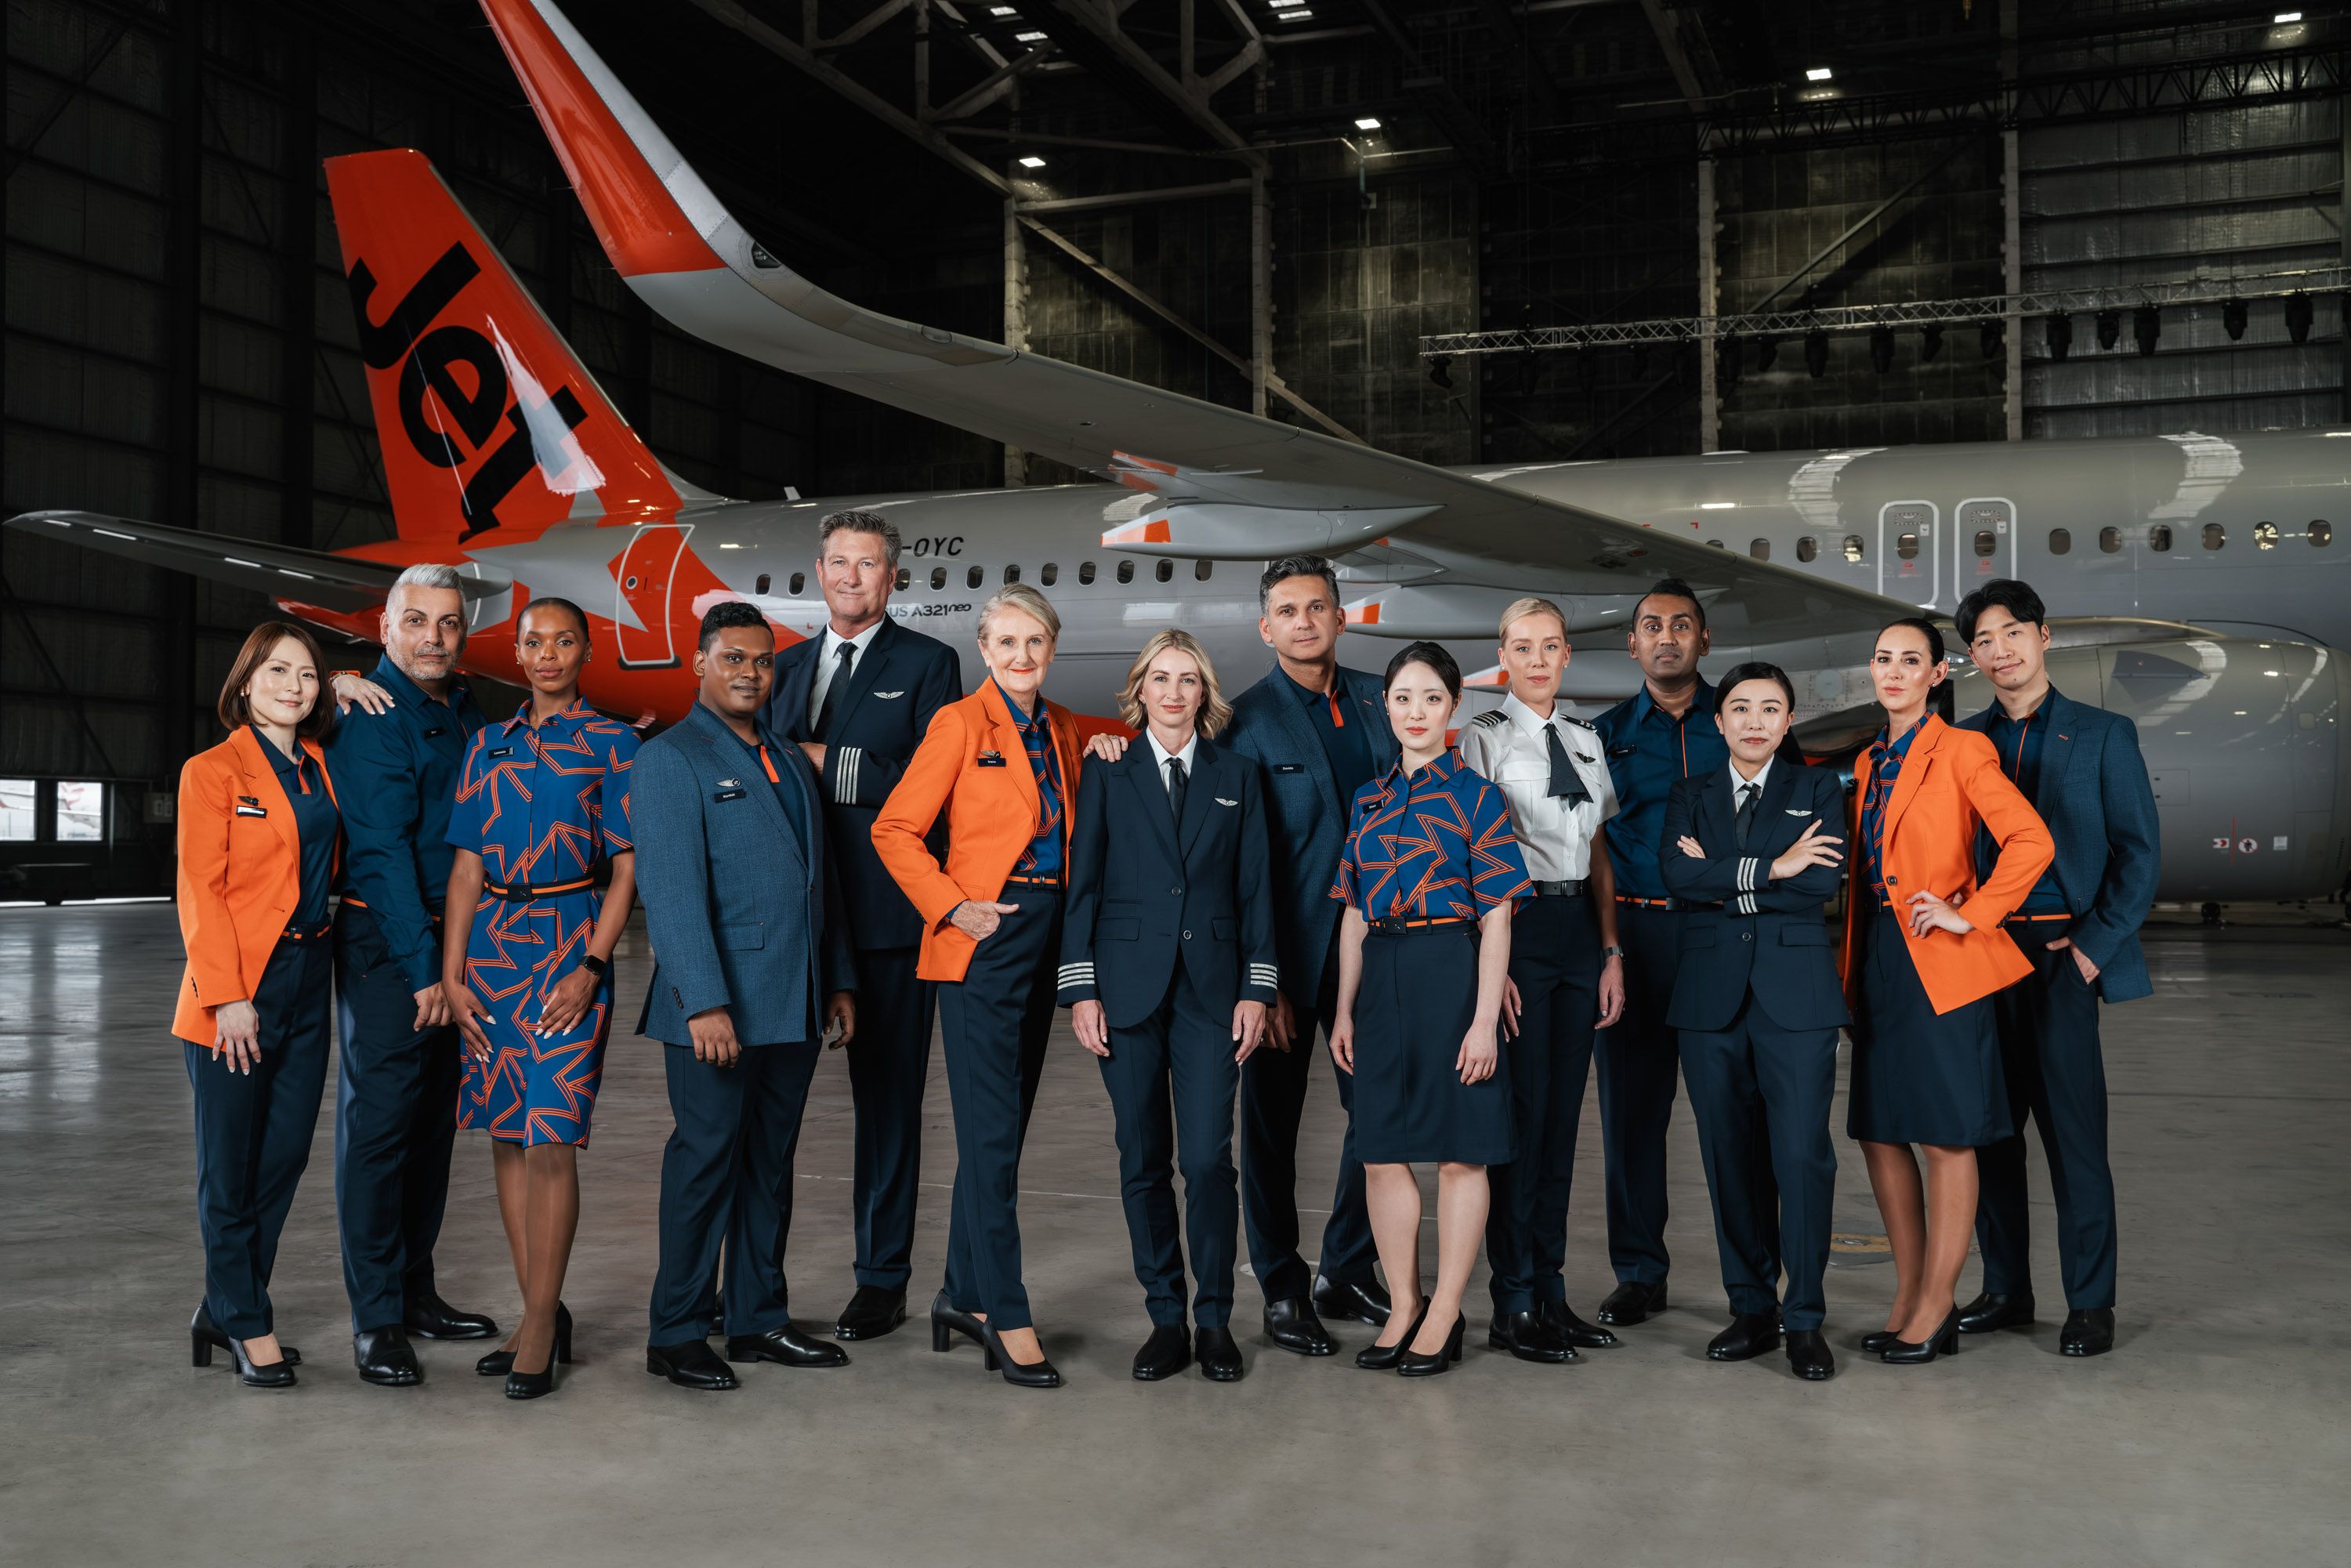 Jetstar Group crew Australia, New Zealand, Singapore and Japan